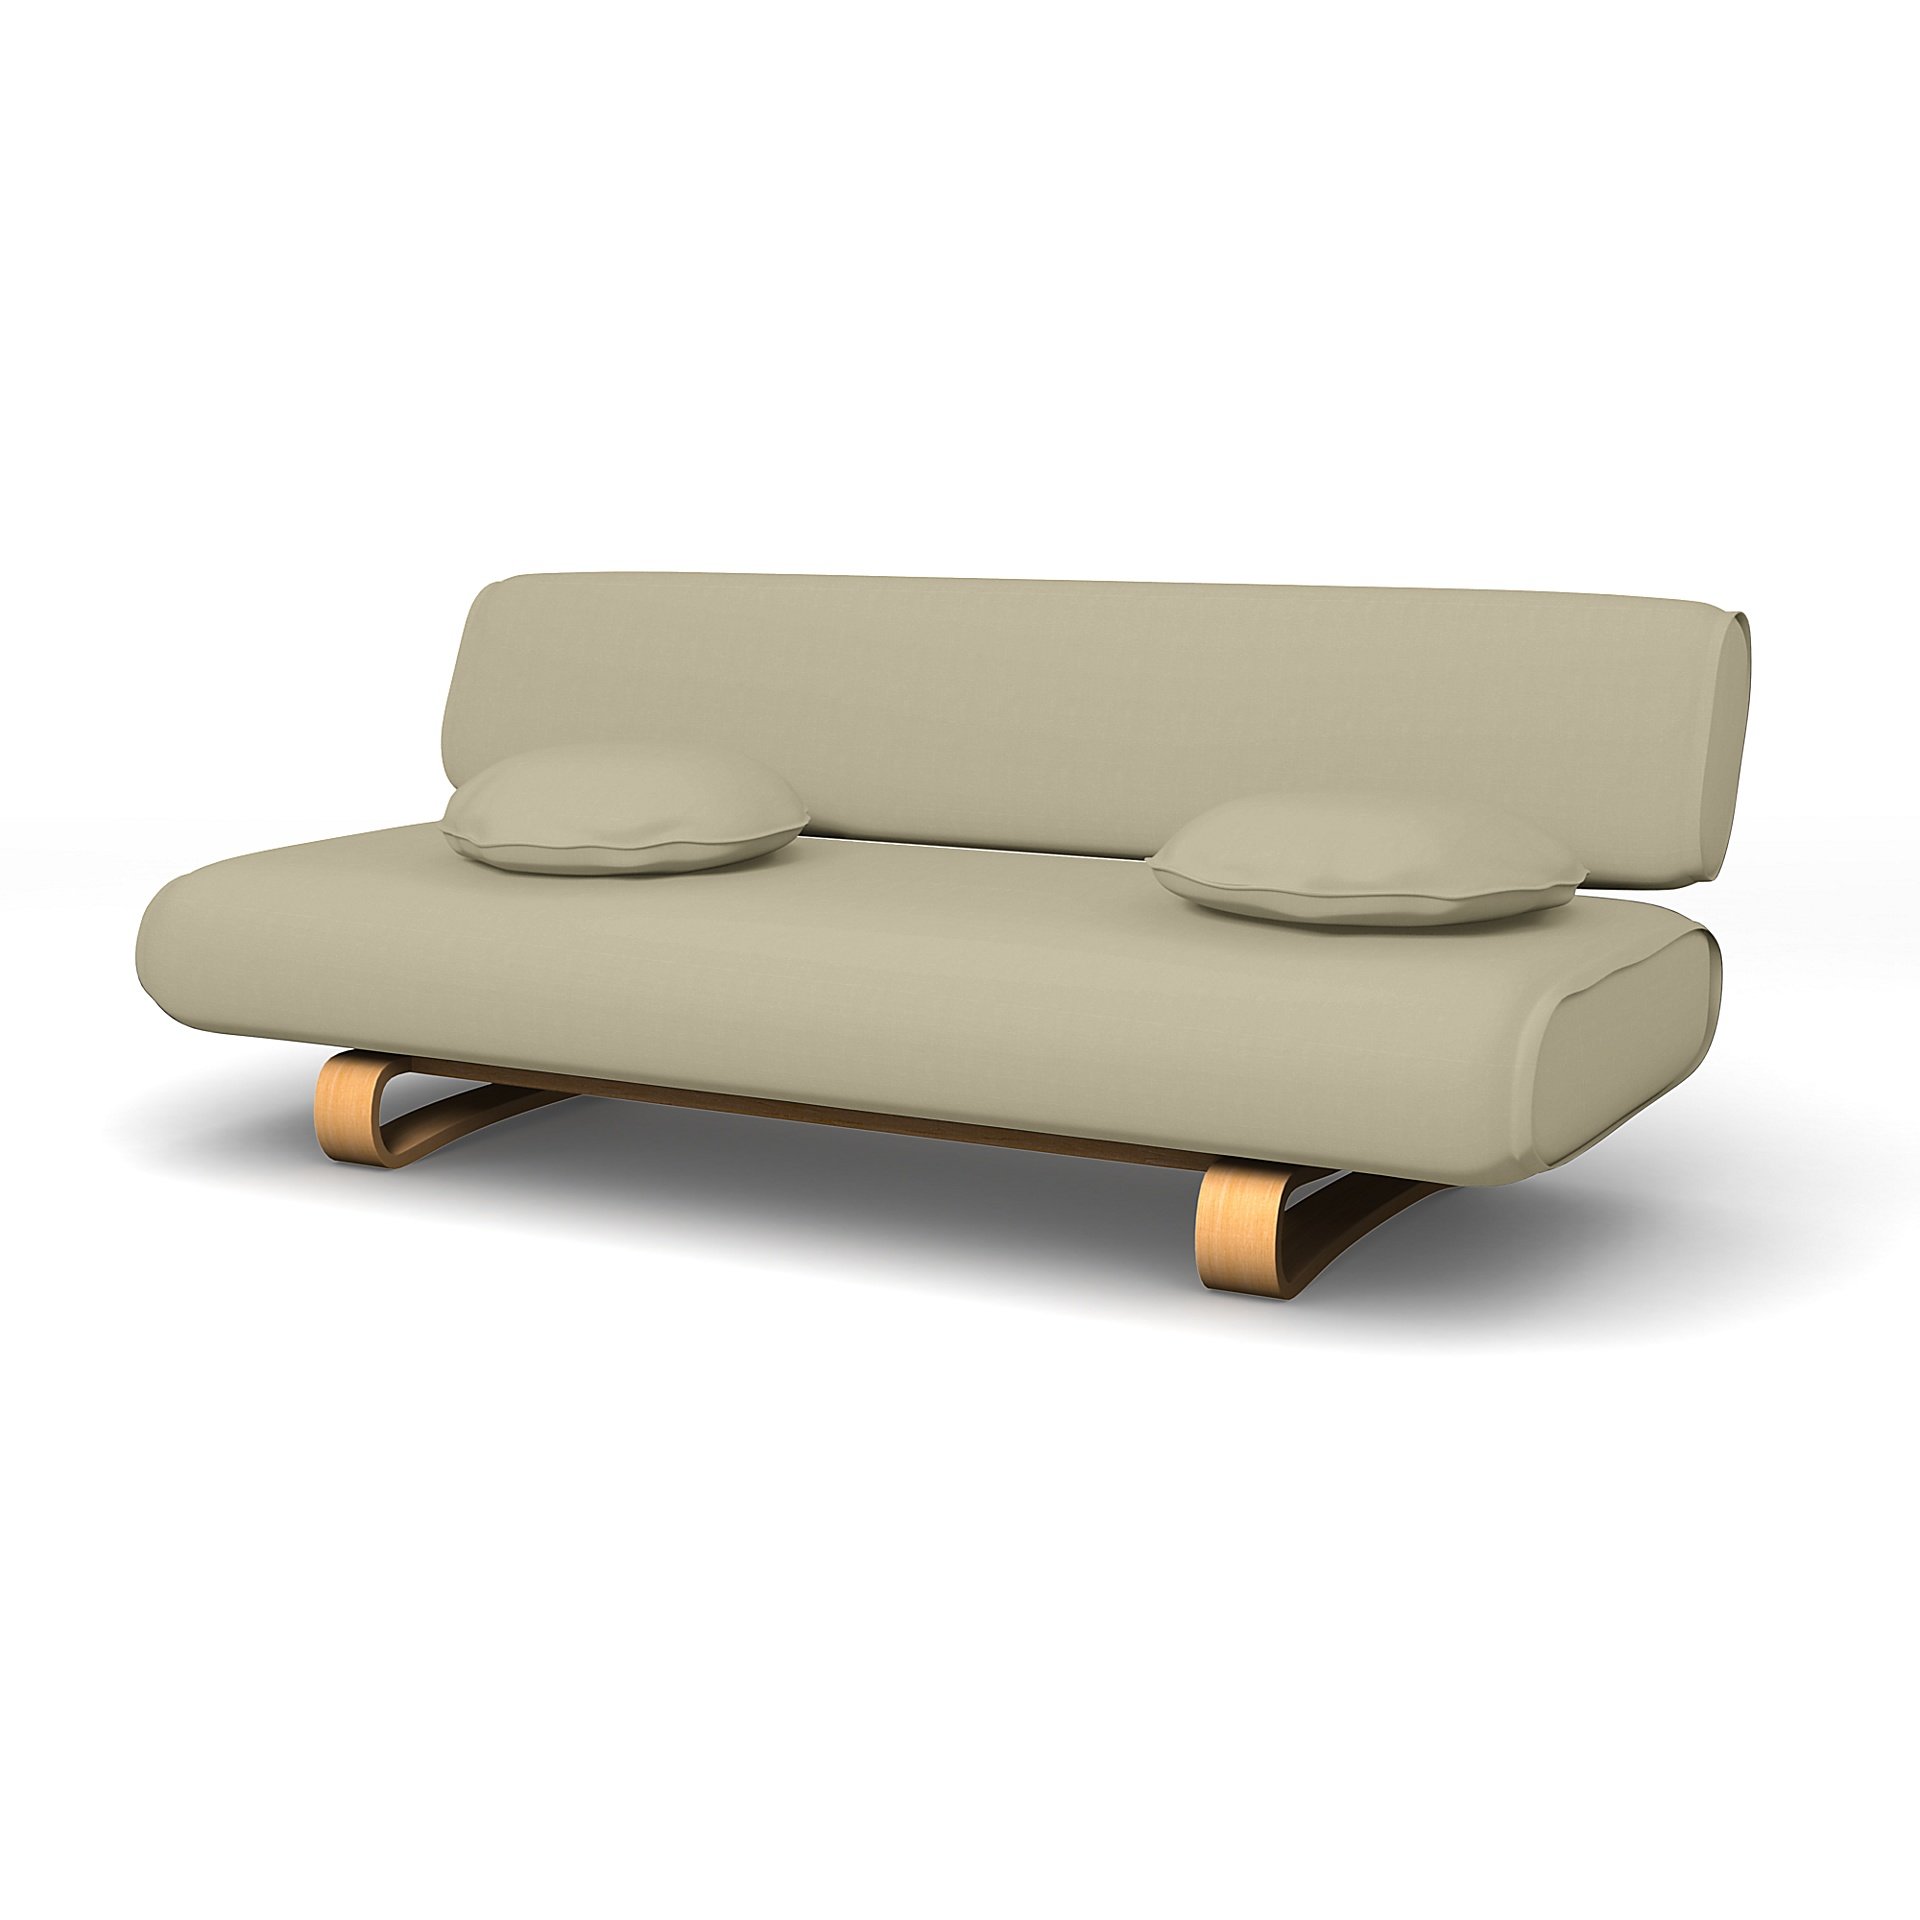 IKEA - Allerum Sofa Bed Cover, Sand Beige, Cotton - Bemz